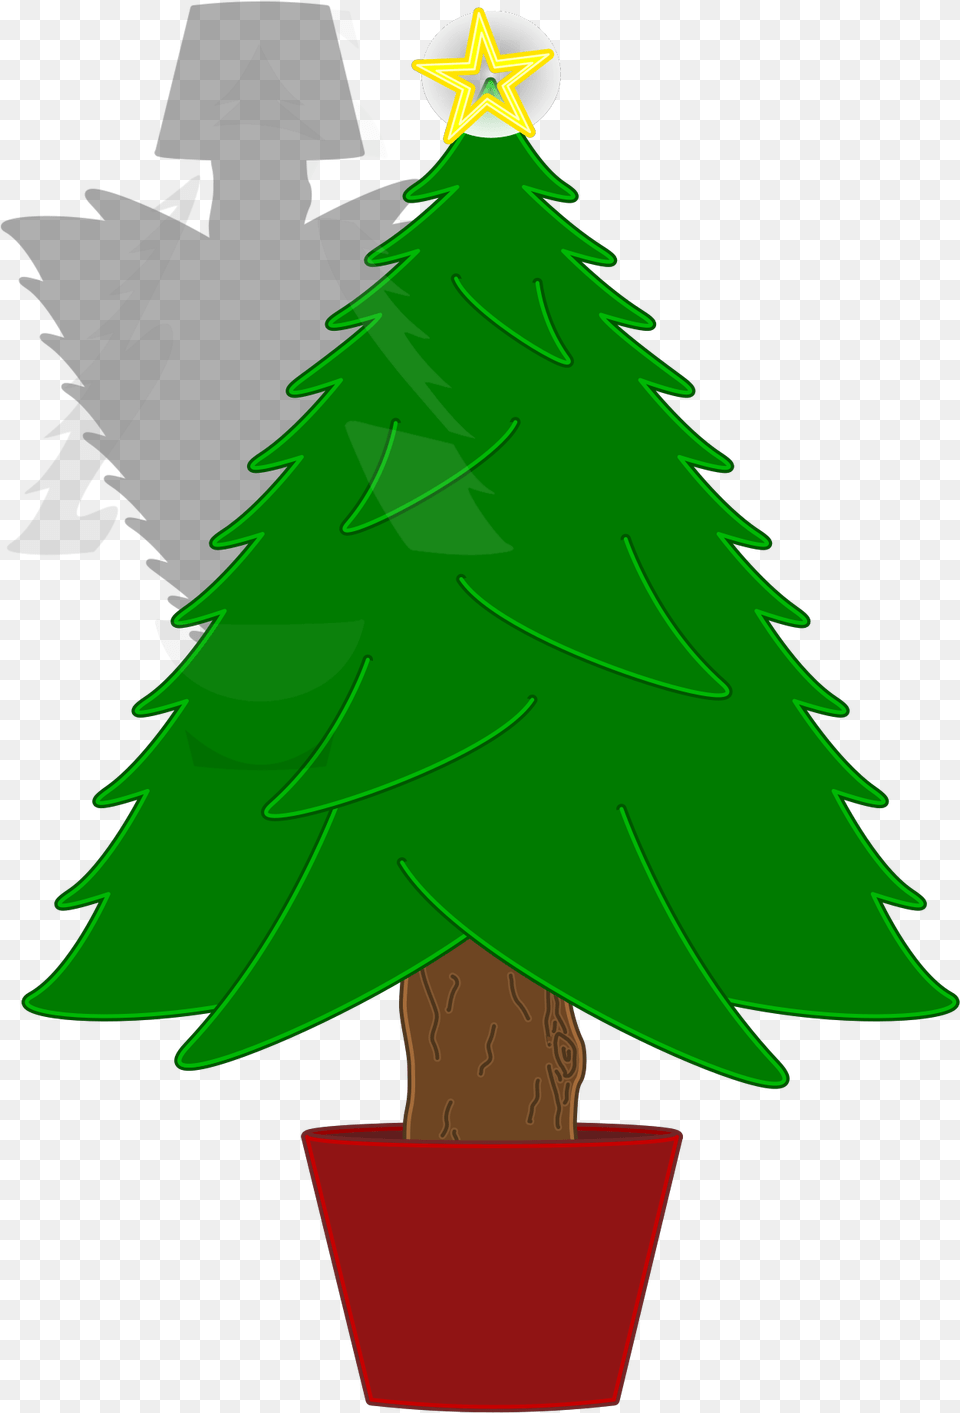 Download Tree Svg Clip Arts Cartoon Christmas Tree, Plant, Festival, Christmas Decorations, Christmas Tree Png